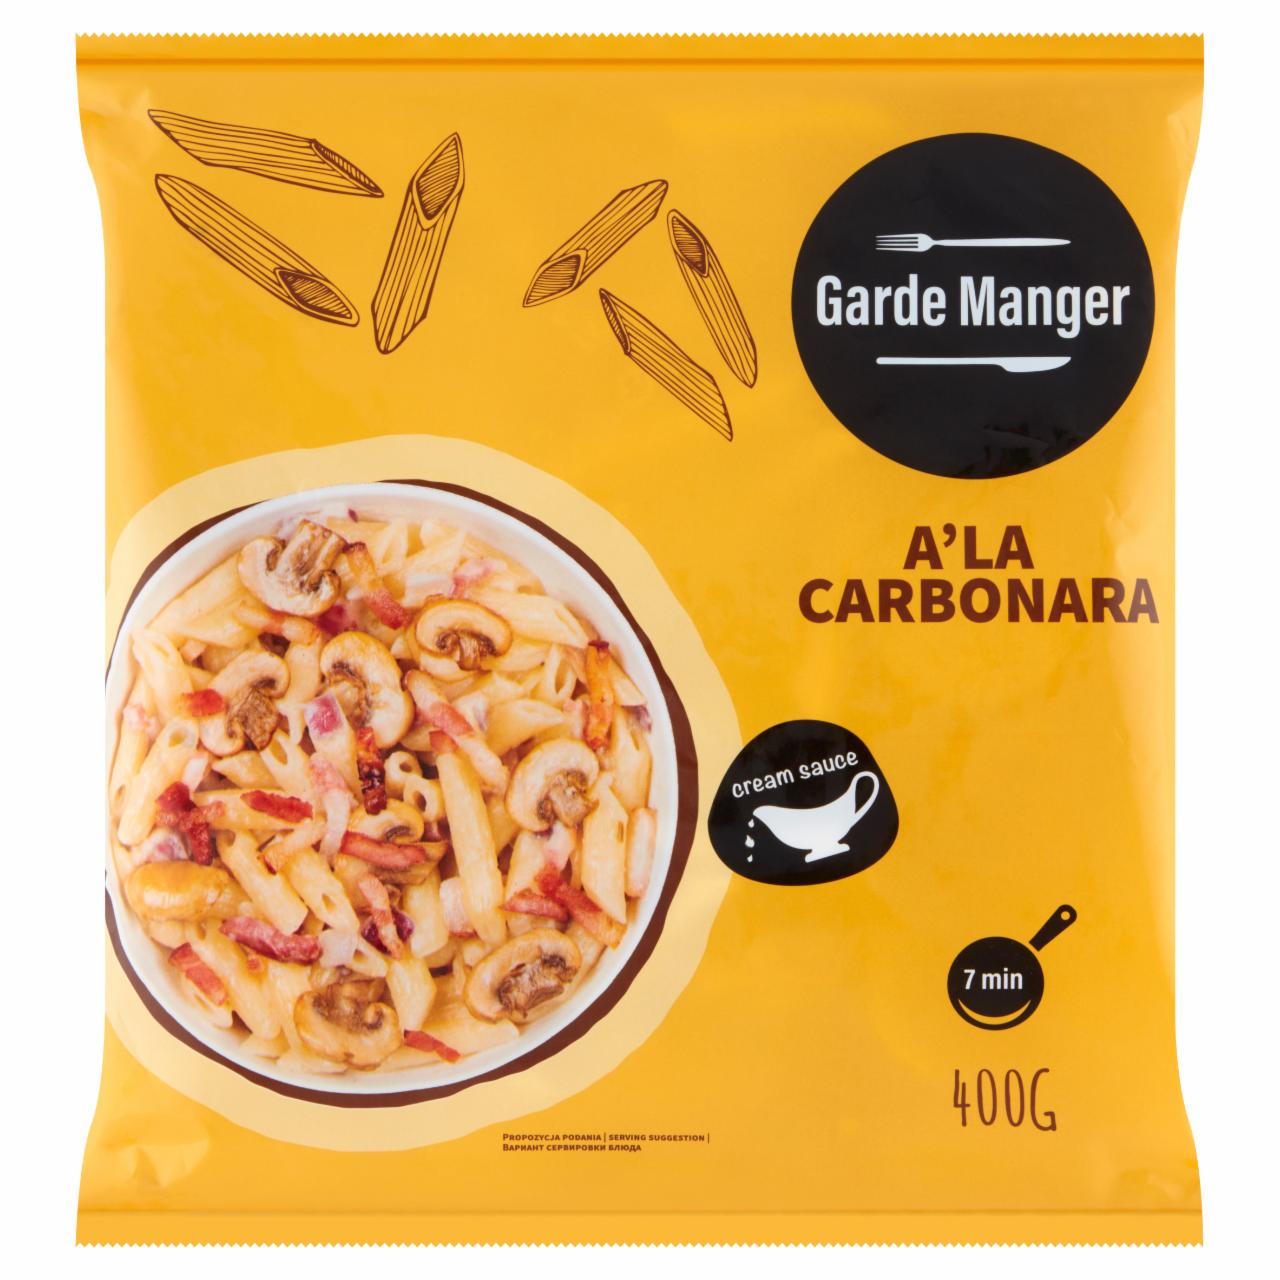 Zdjęcia - Garde Manger a'la Carbonara z pieczarkami 400 g